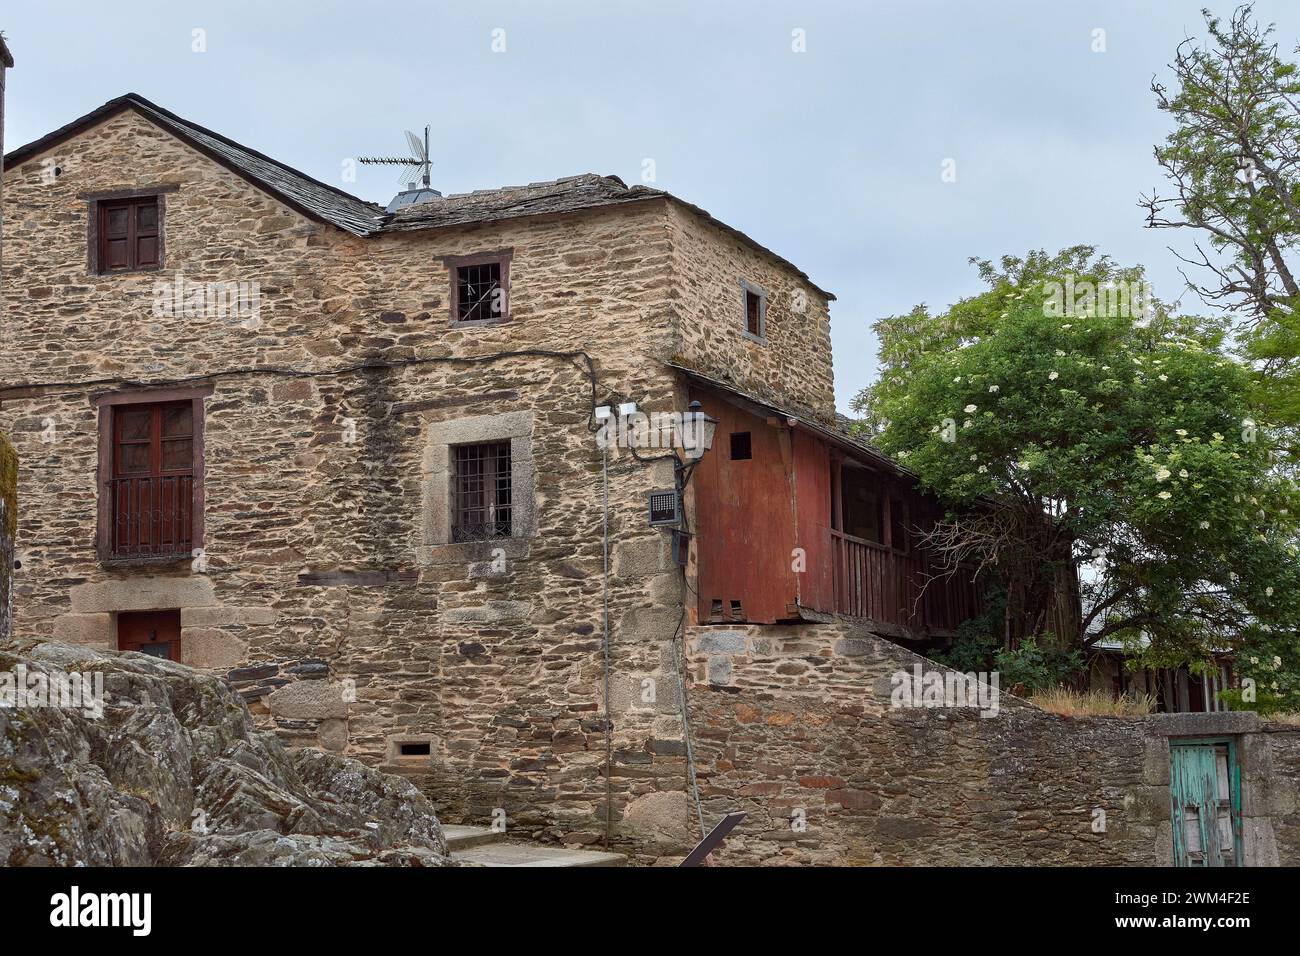 Old village with picturesque stone buildings and flowers in Puebla de Sanabria, Zamora province, Castilla y León, Spain Stock Photo